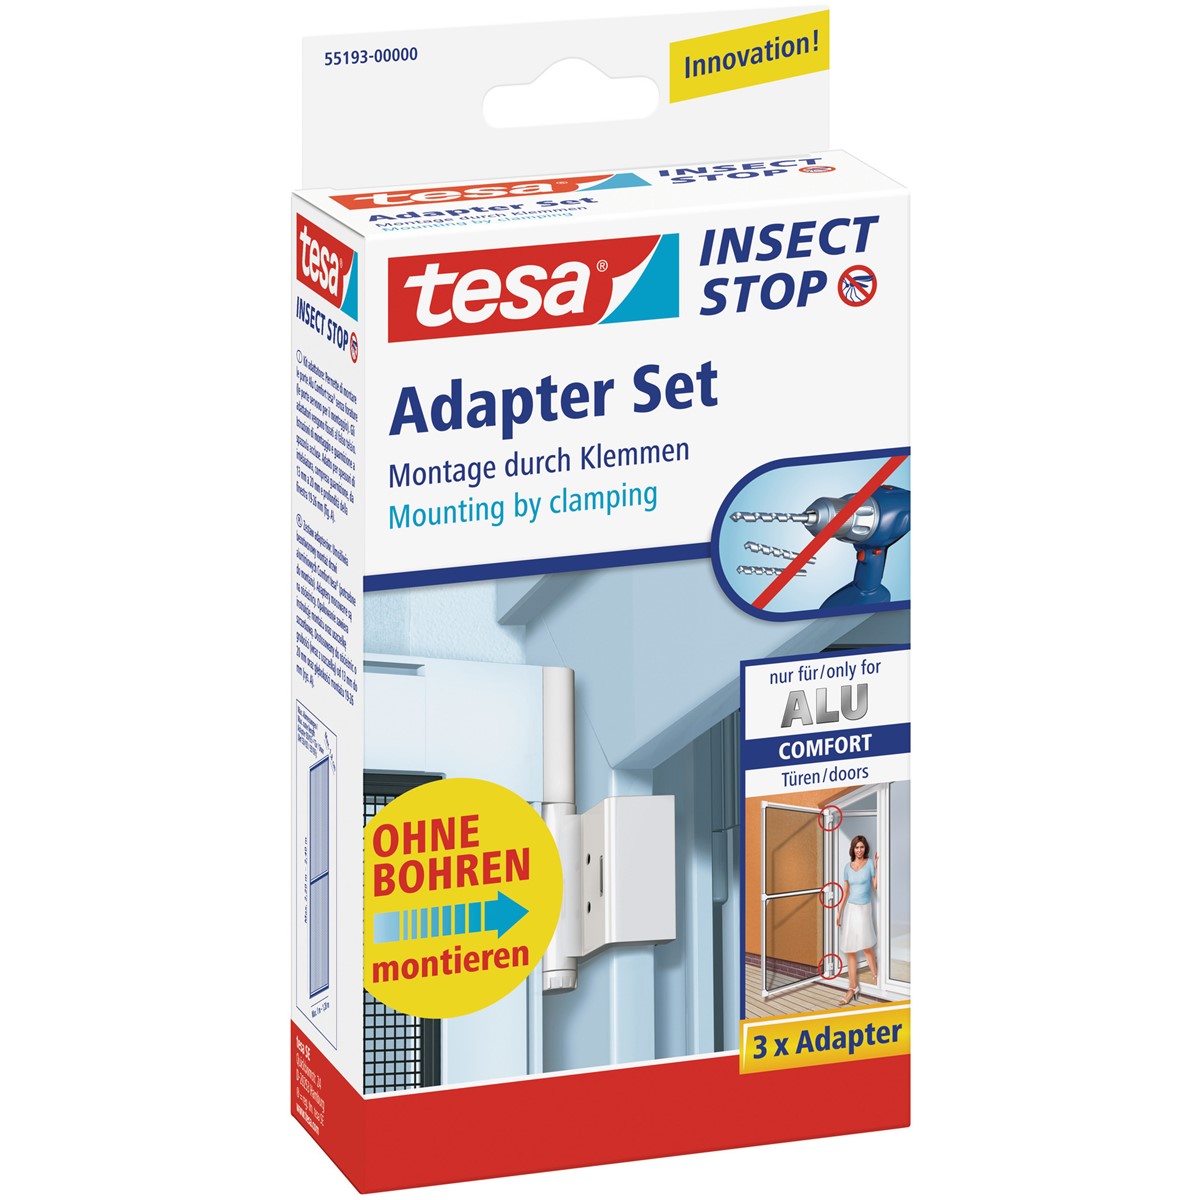 tesa 55193-00000 - Insect Stop Adapter für ALU COMFORT Tür, weiß